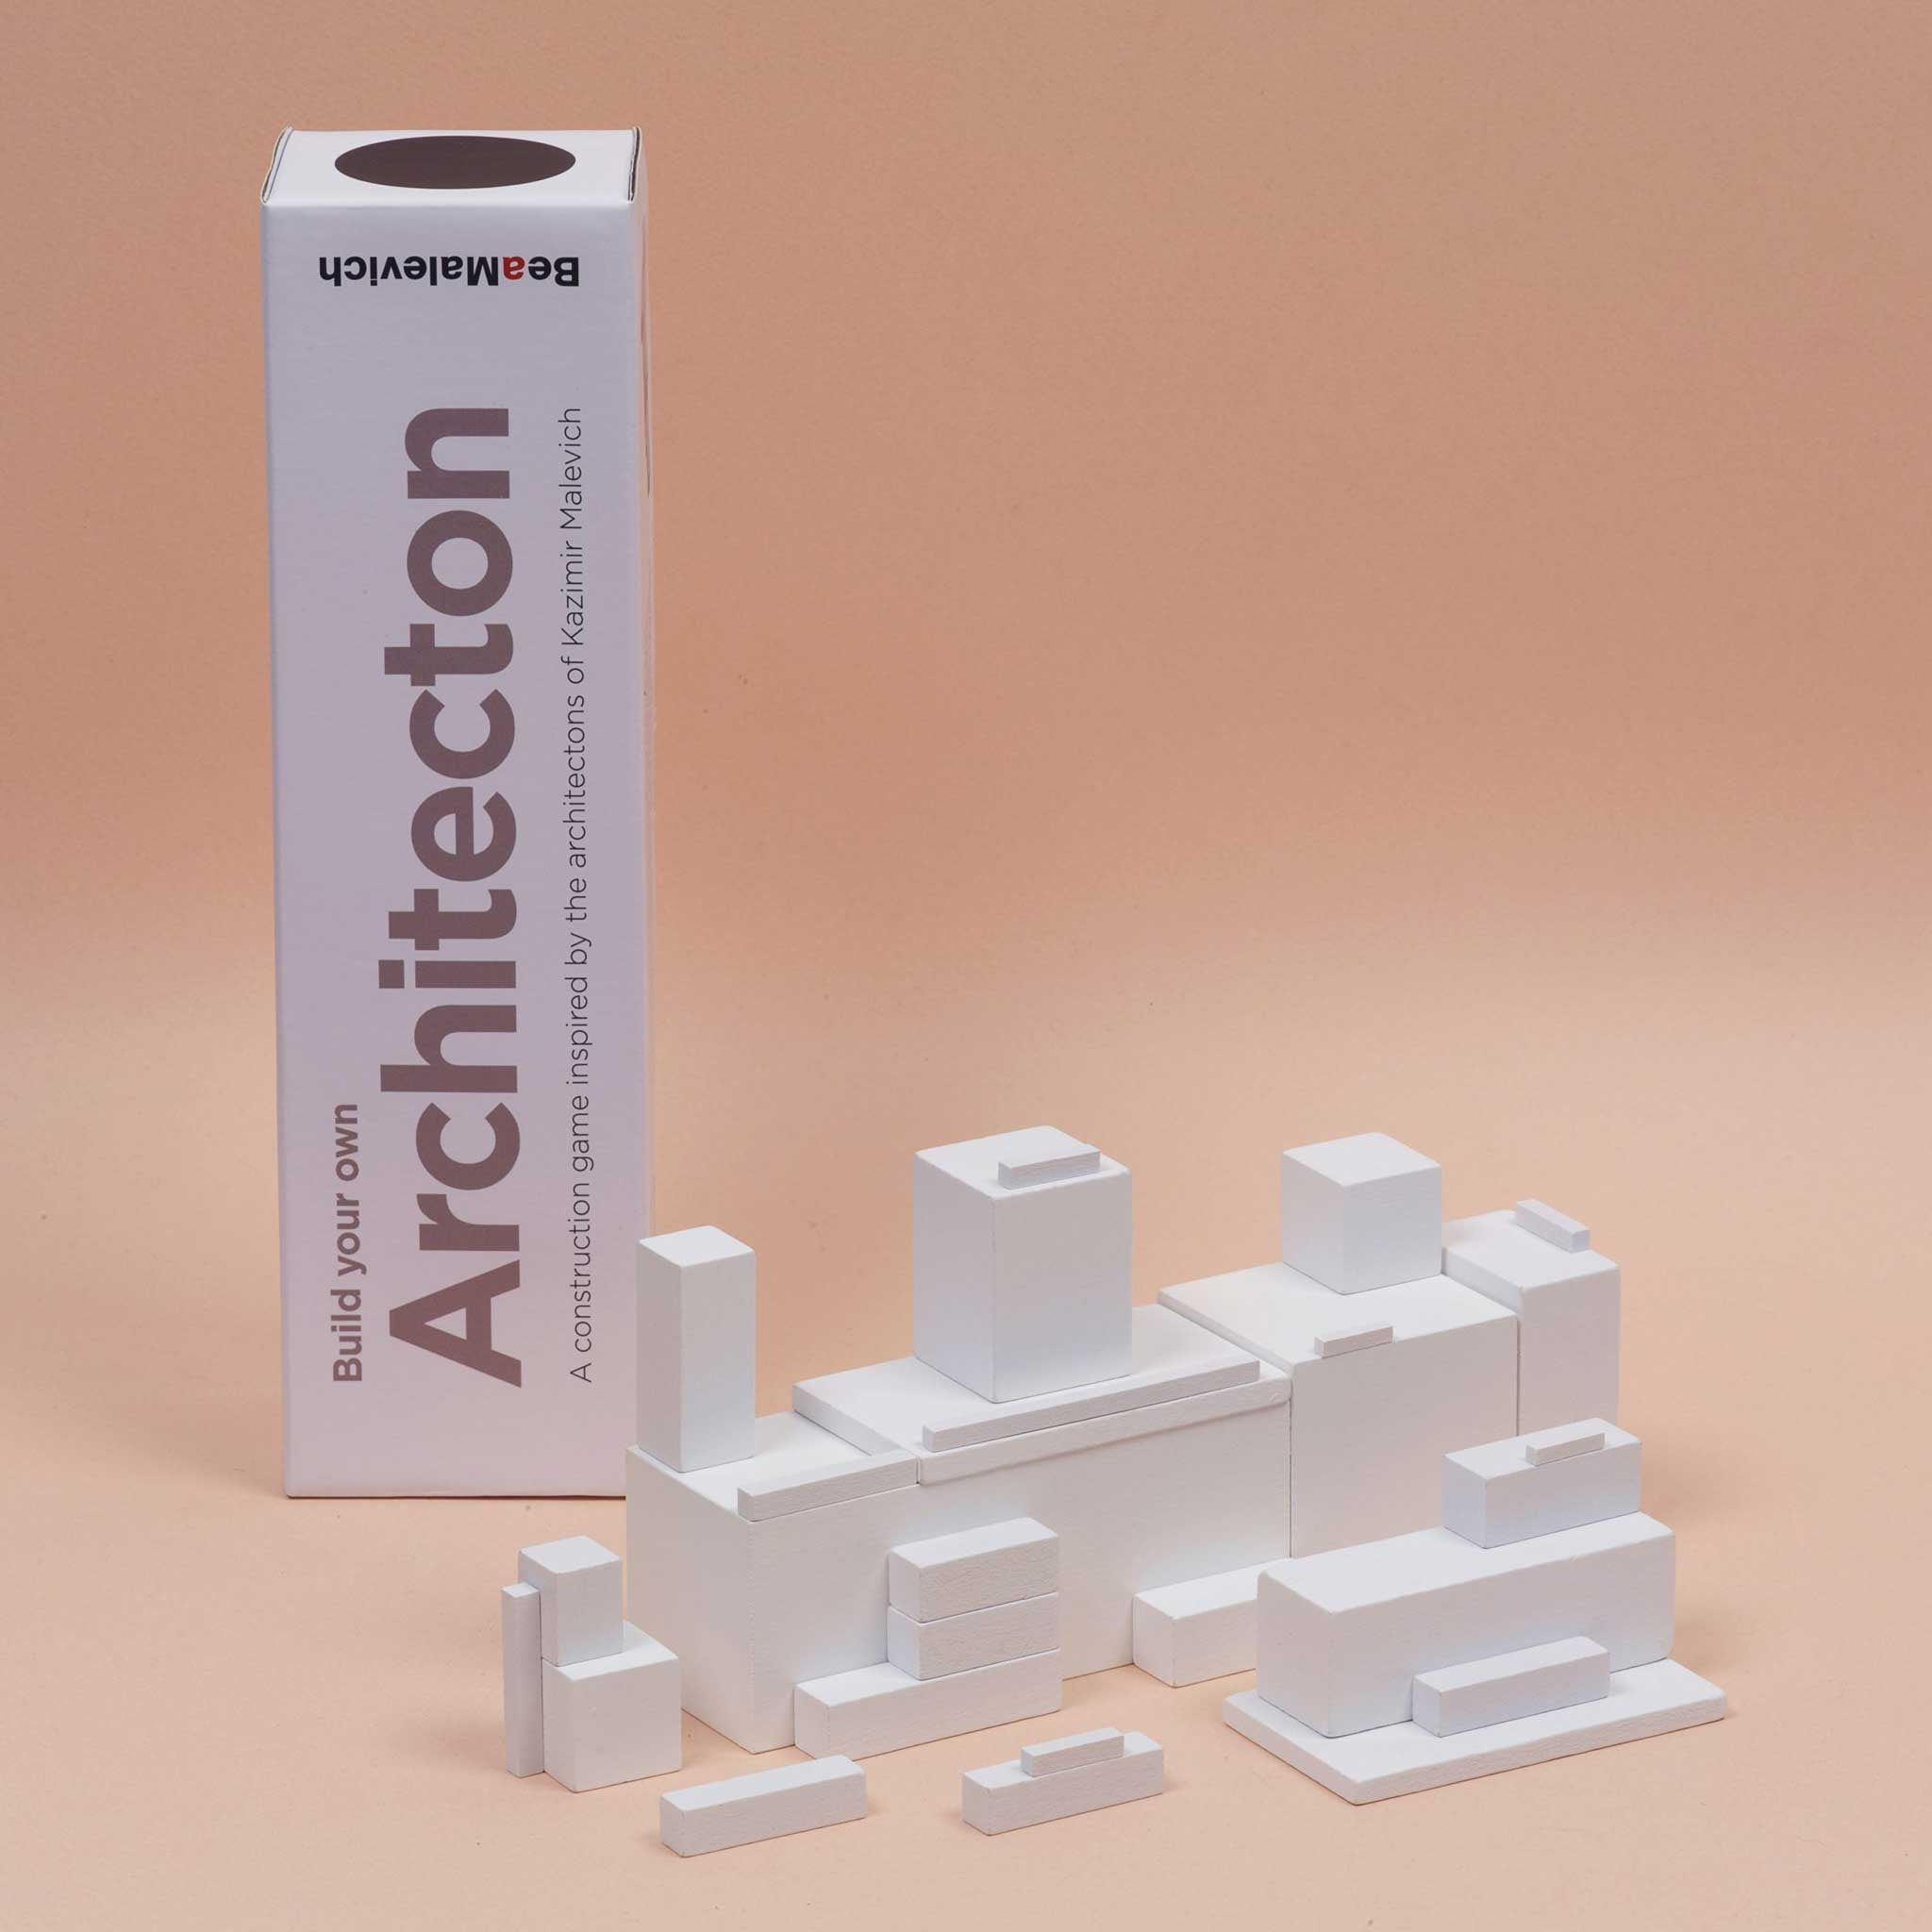 ARCHITECTON | wooden Building Blocks | C4 Large version | BeaMalevich